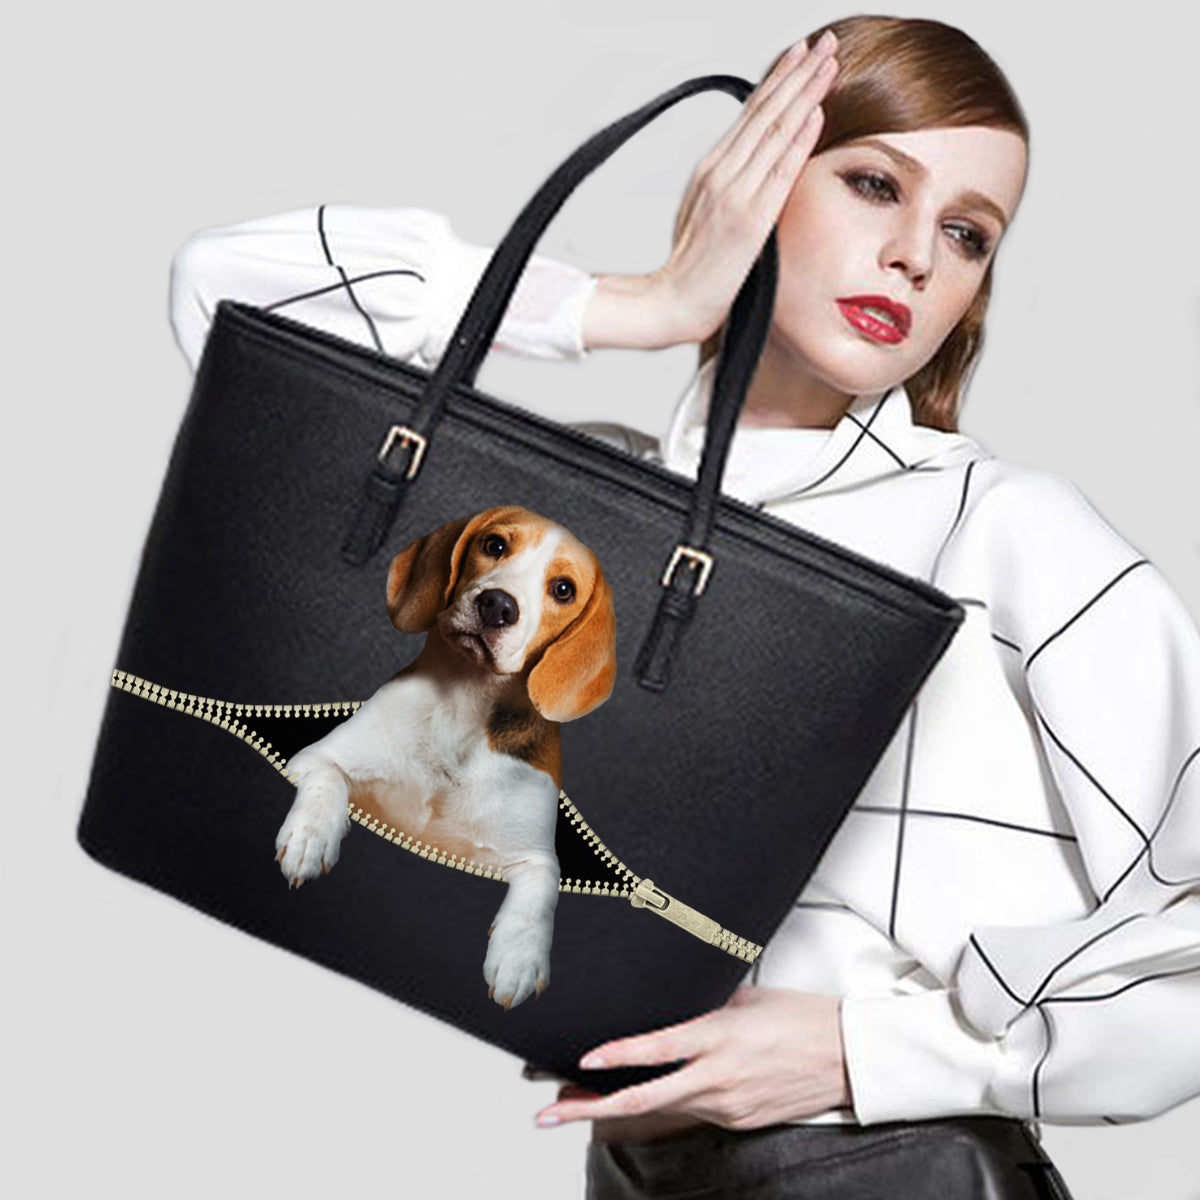 Beagle Tote Bag V1